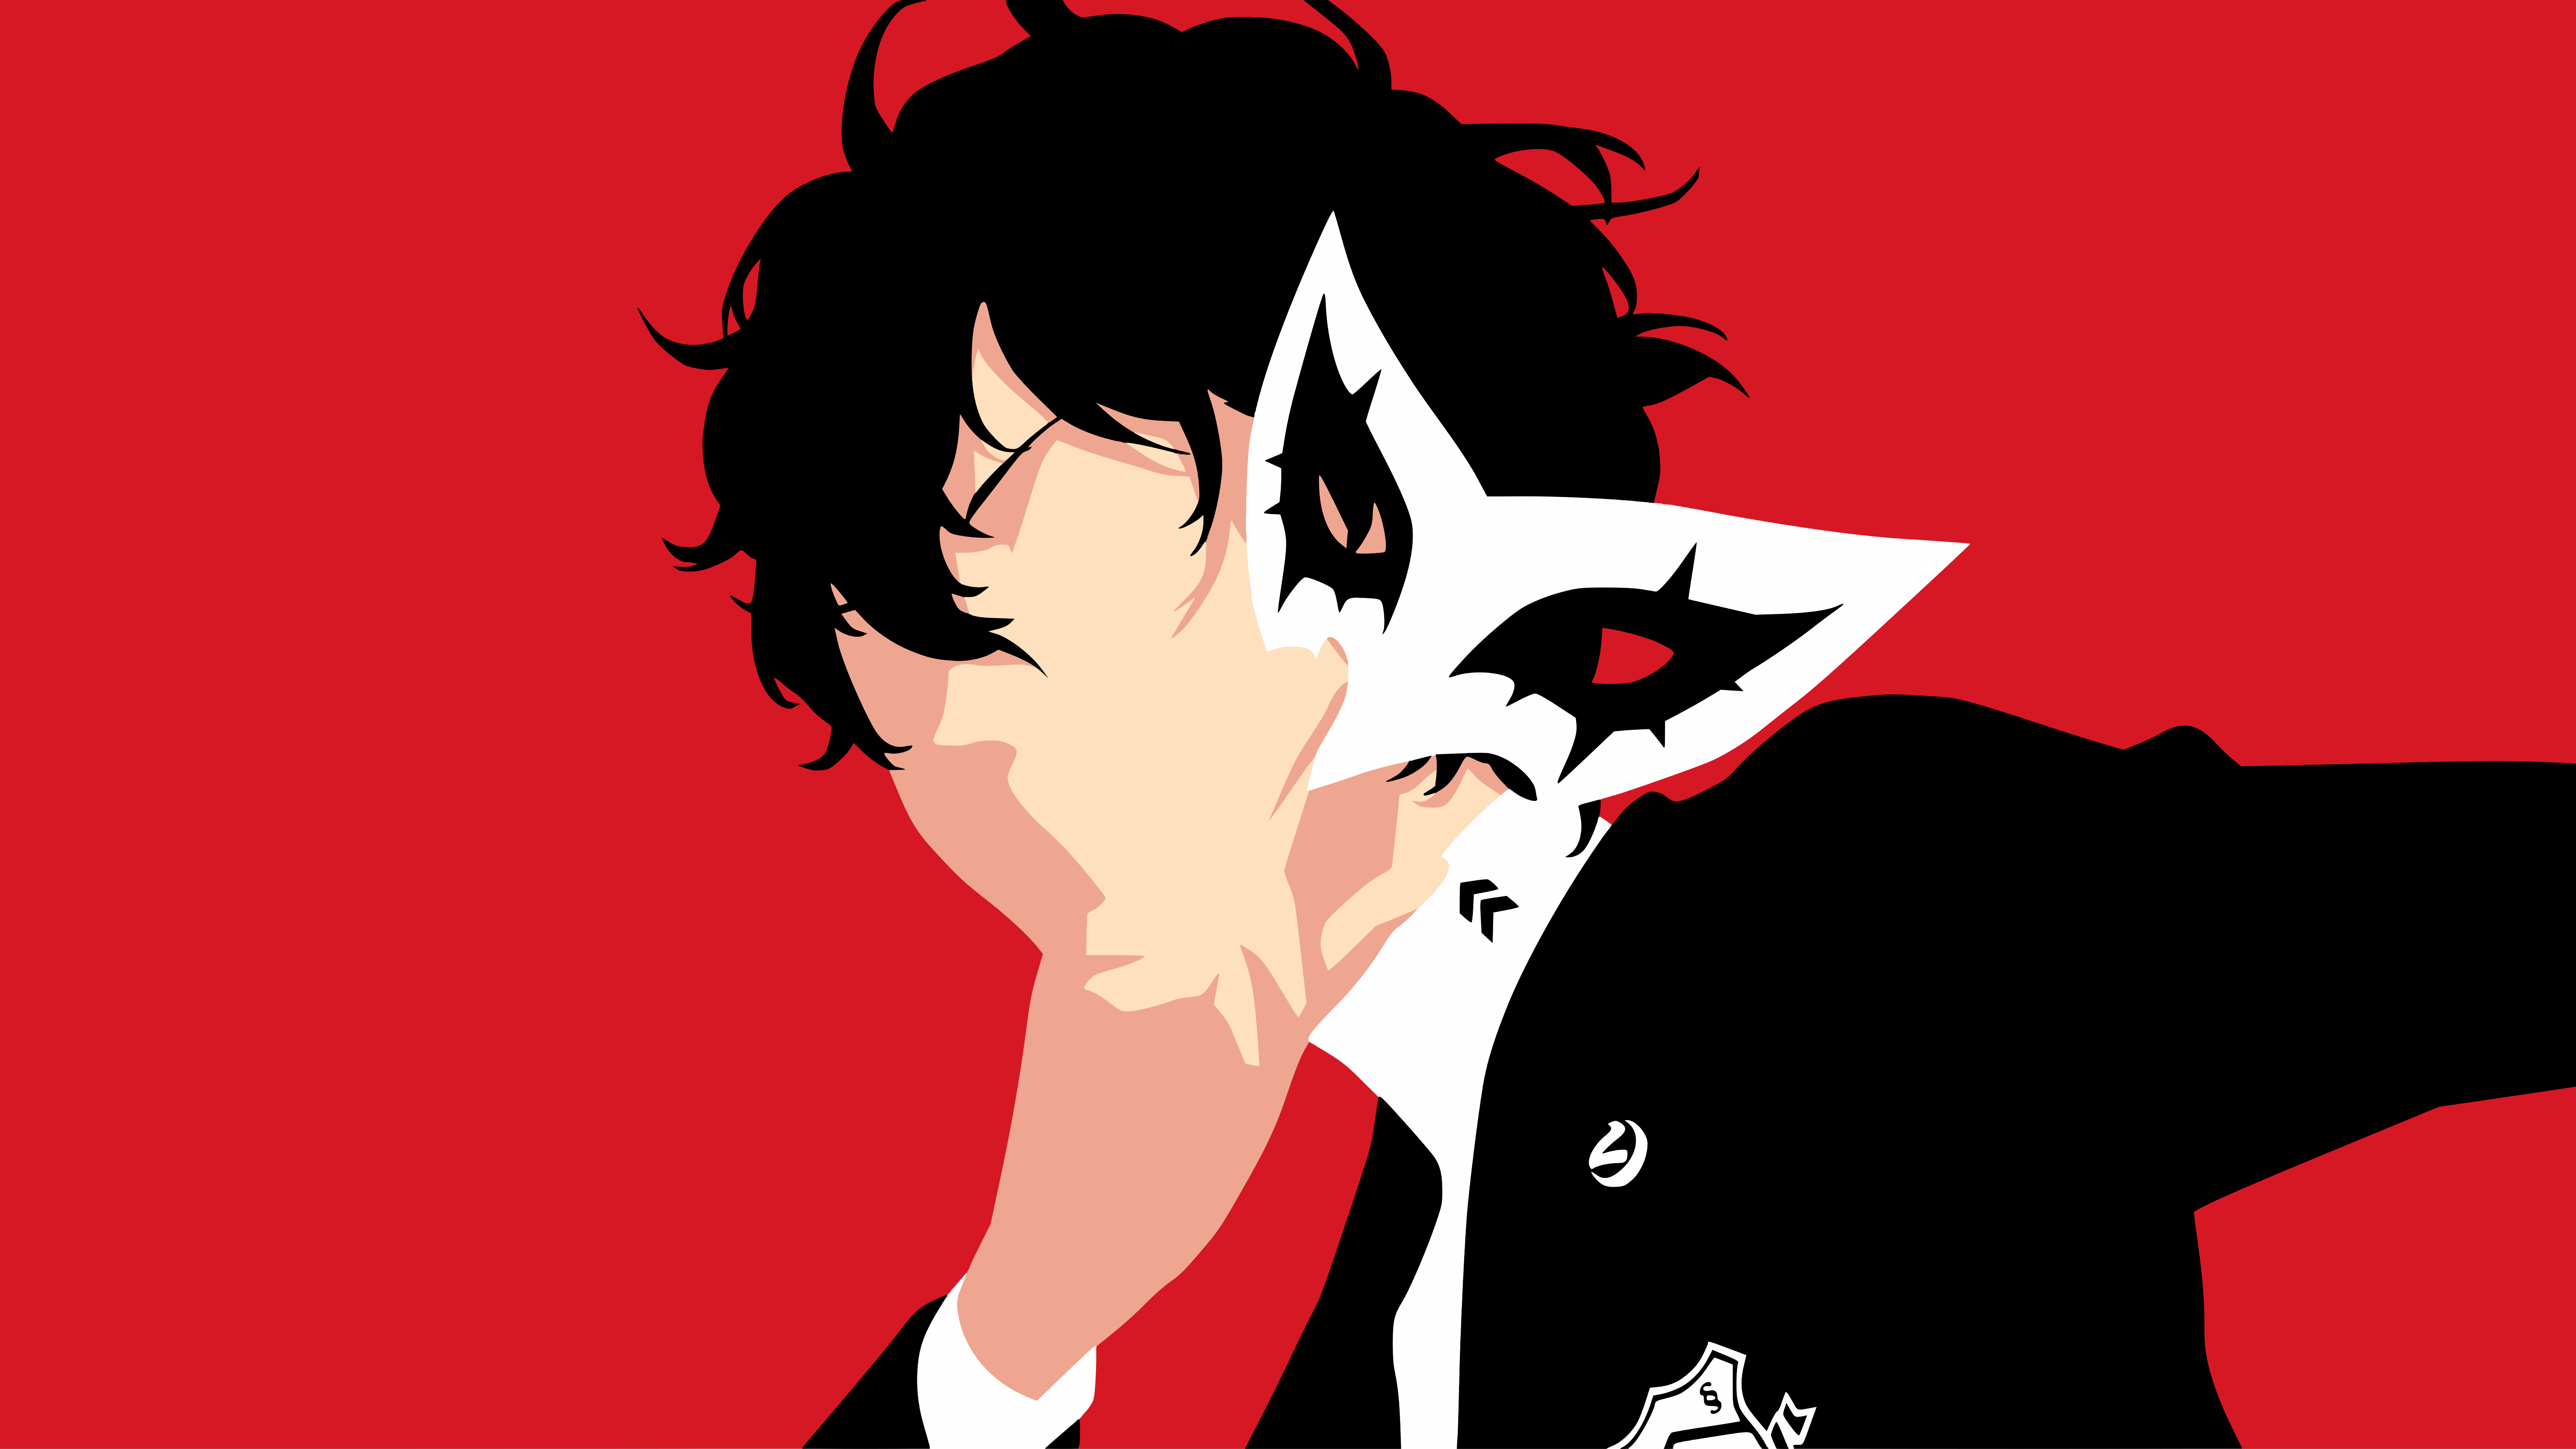 Persona 5 Joker Red Wallpaper by DamionMauville on DeviantArt